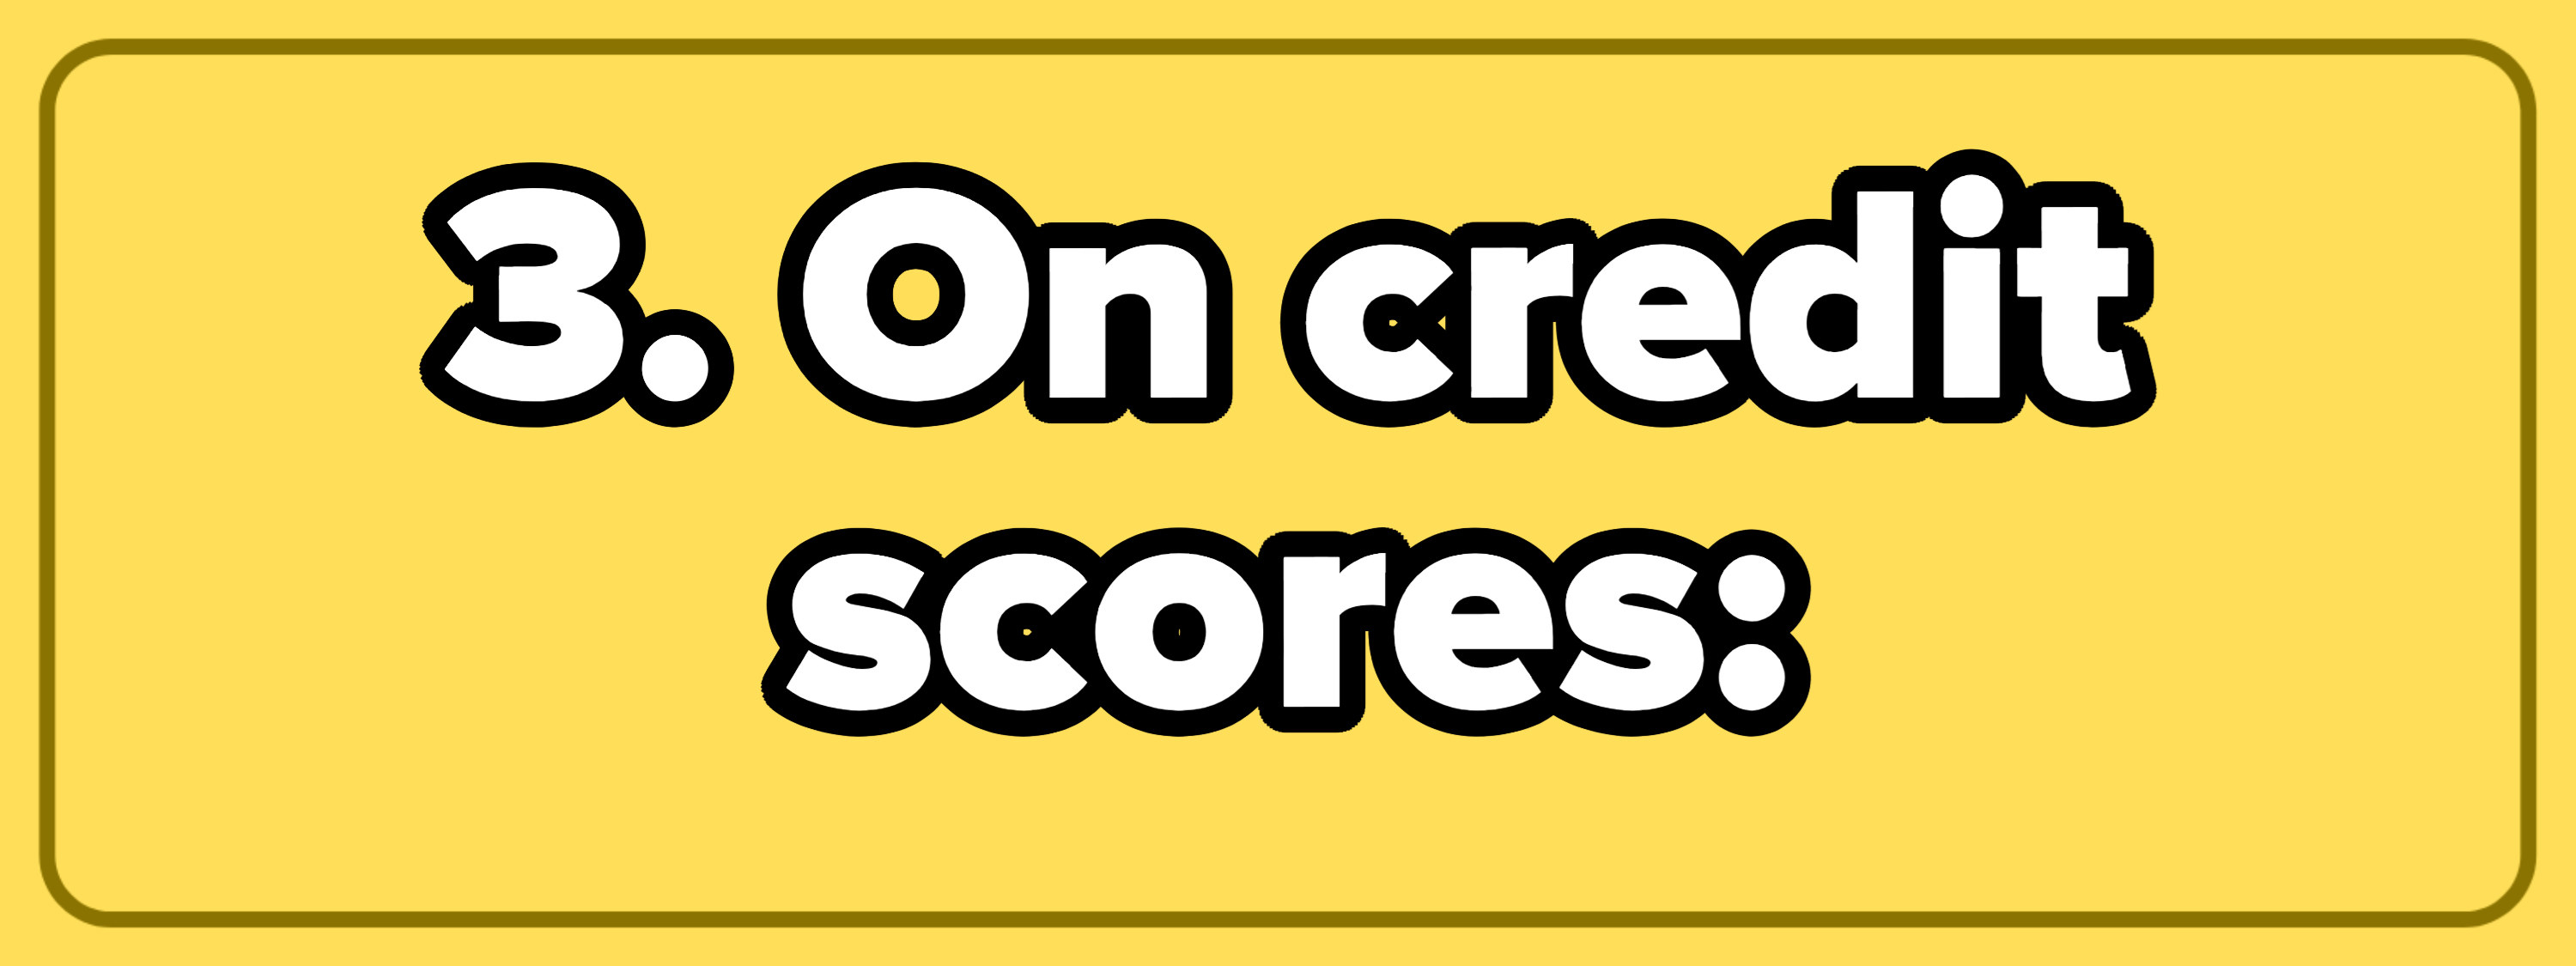 3. On credit scores: